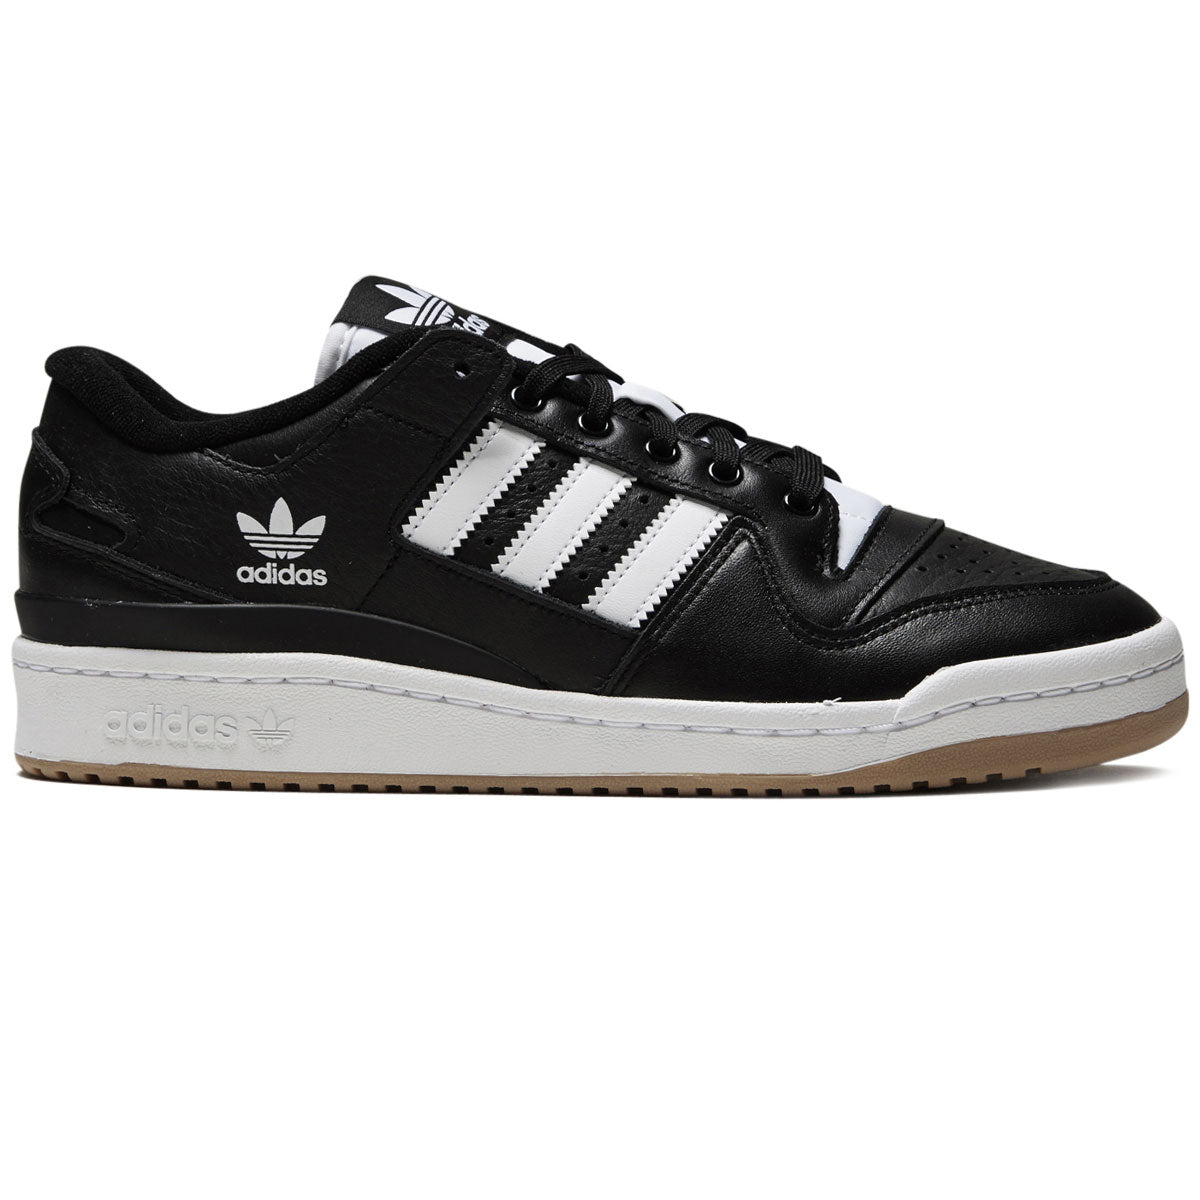 Adidas Forum 84 Low ADV Shoes - Core Black/White/White image 1